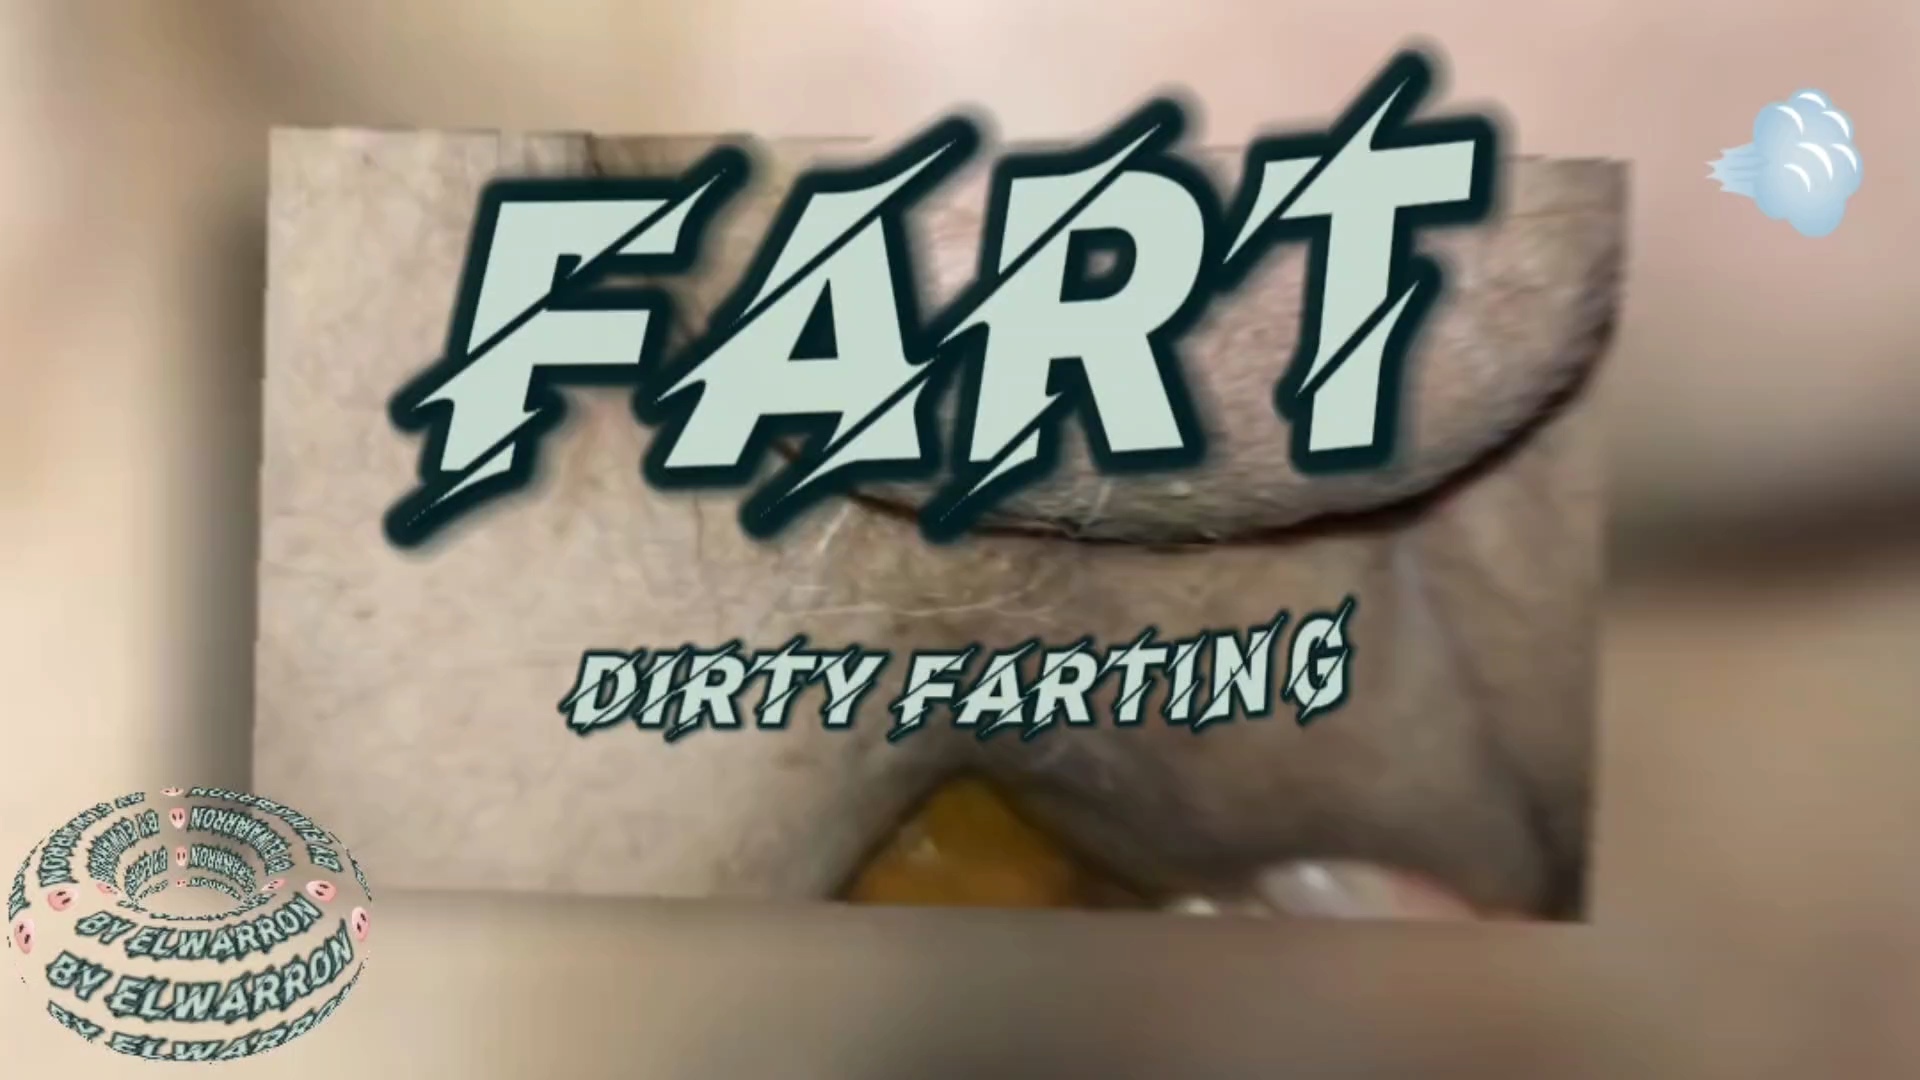 FART. Dirty farting